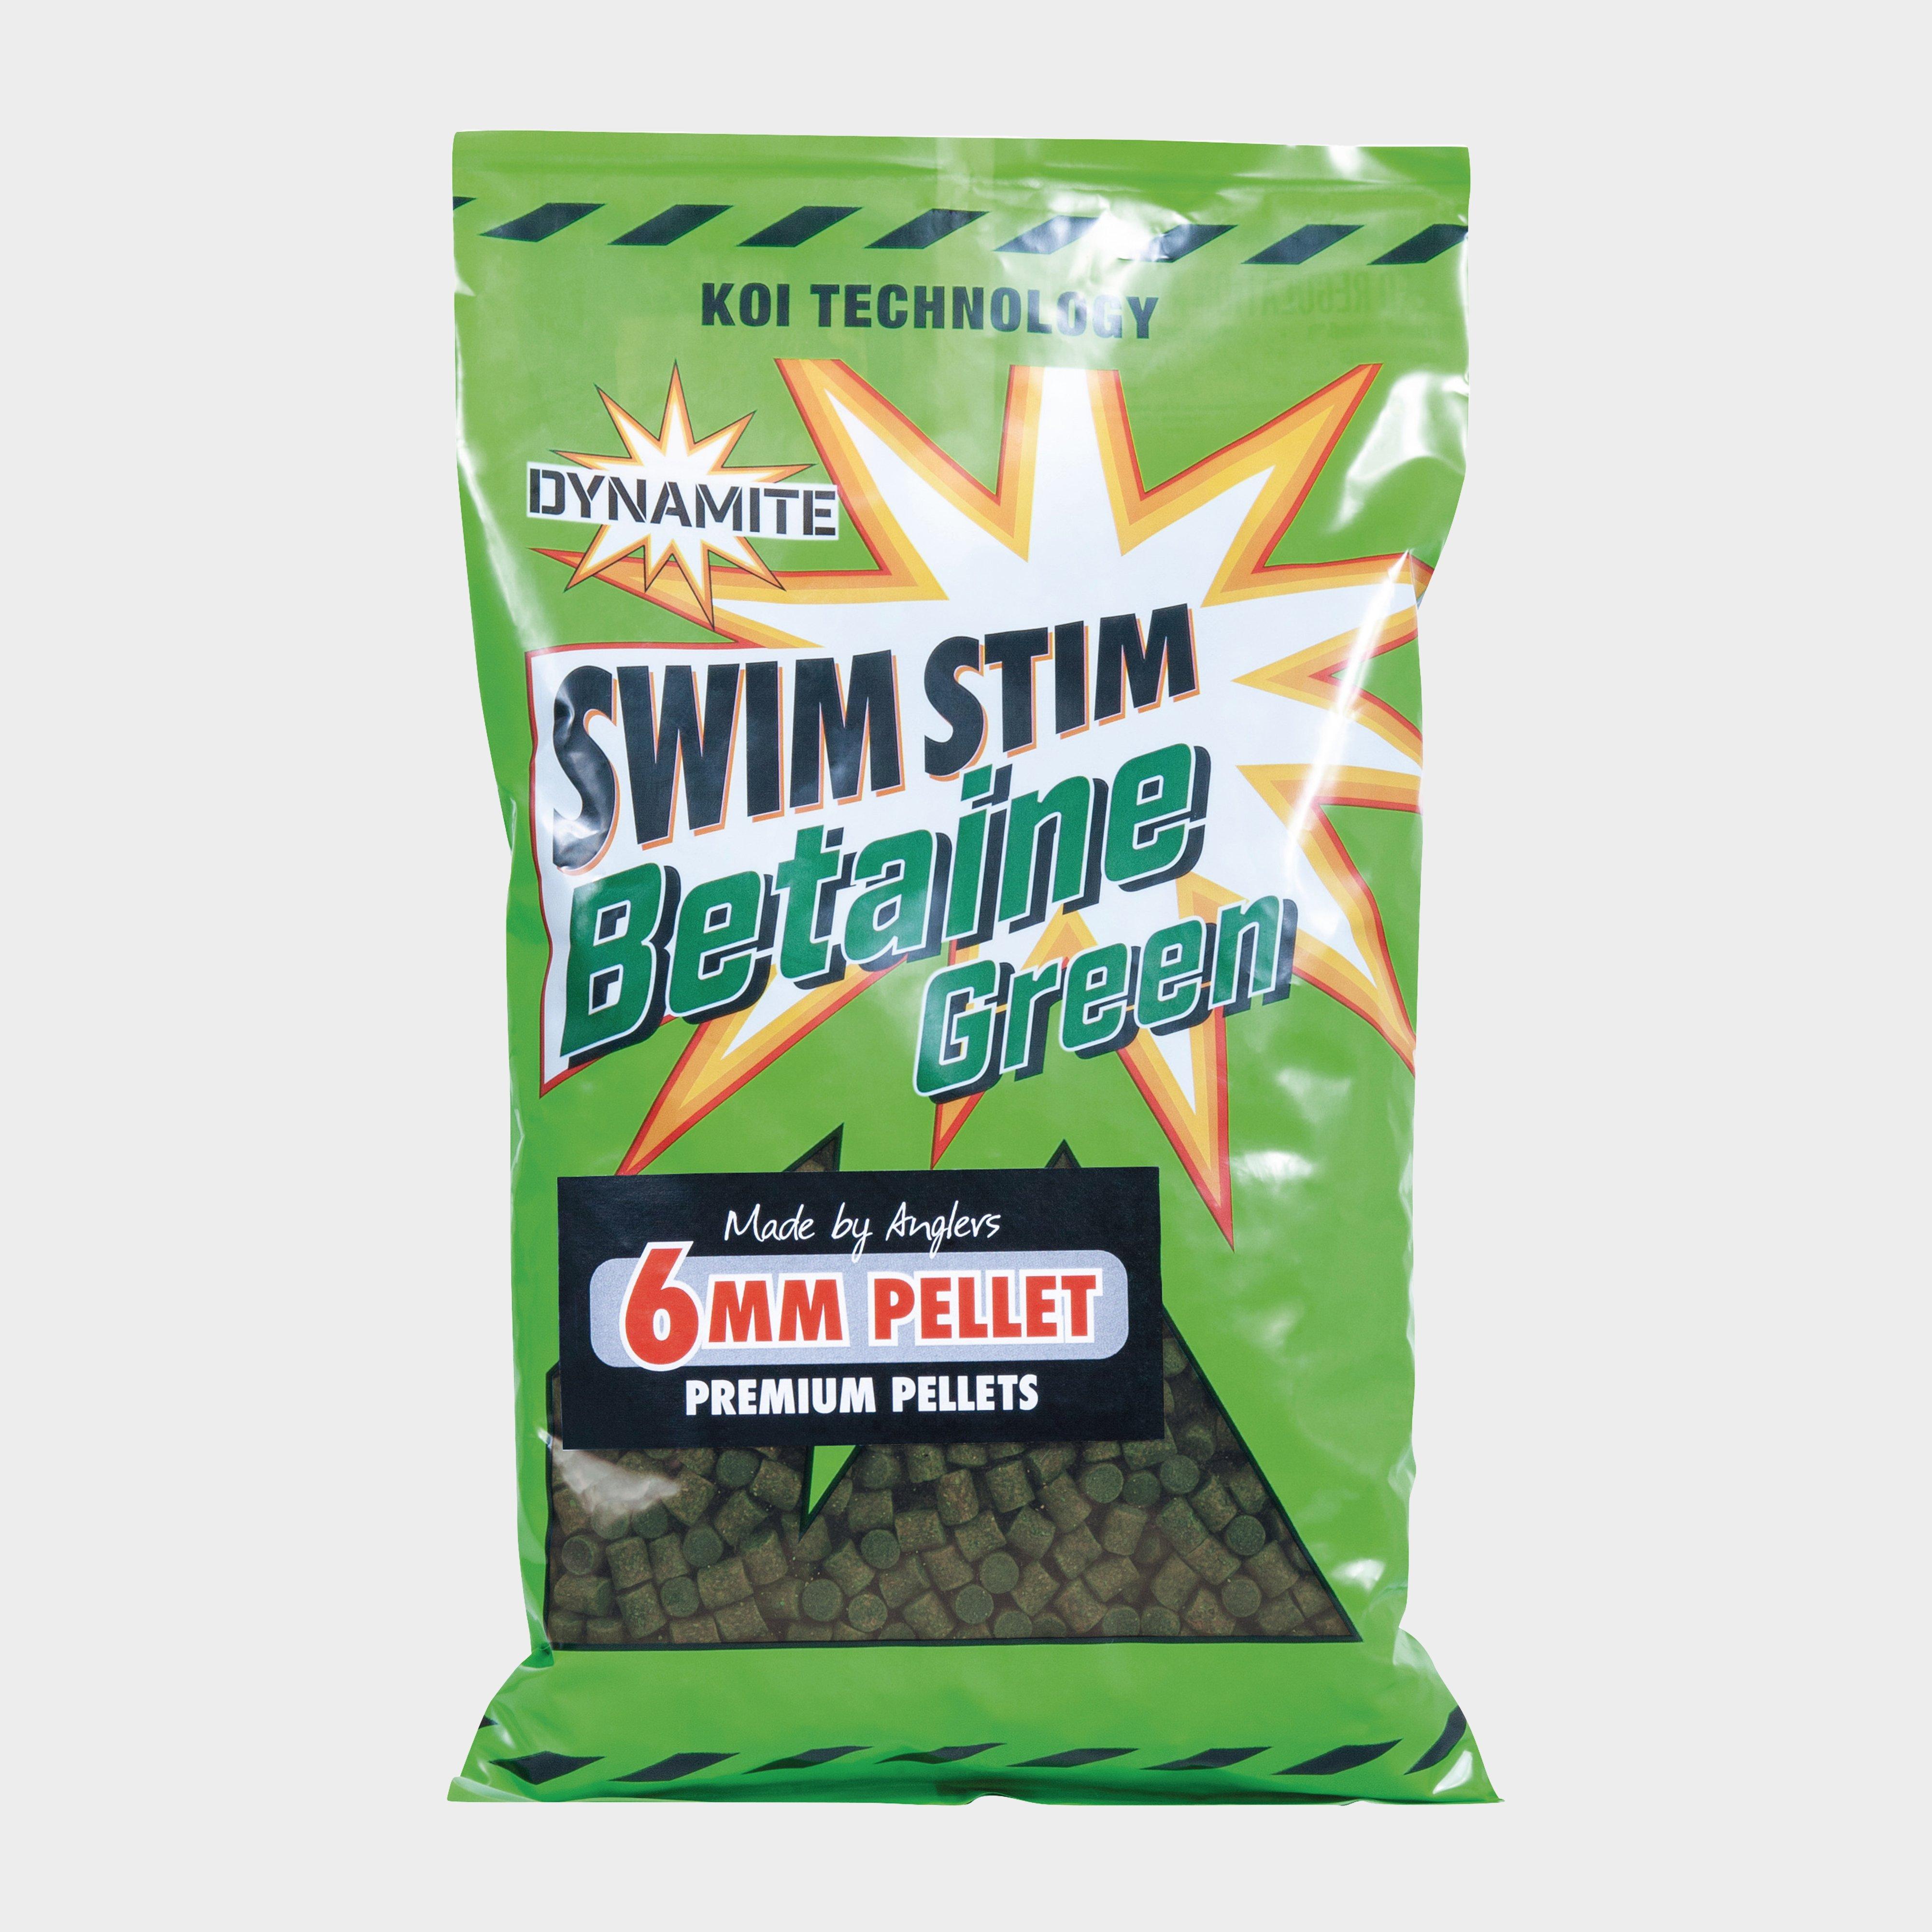 Dynamite Swim Stim Betaine Green Sinking Carp Pellets  6mm 900g - Green/gree  Green/gree